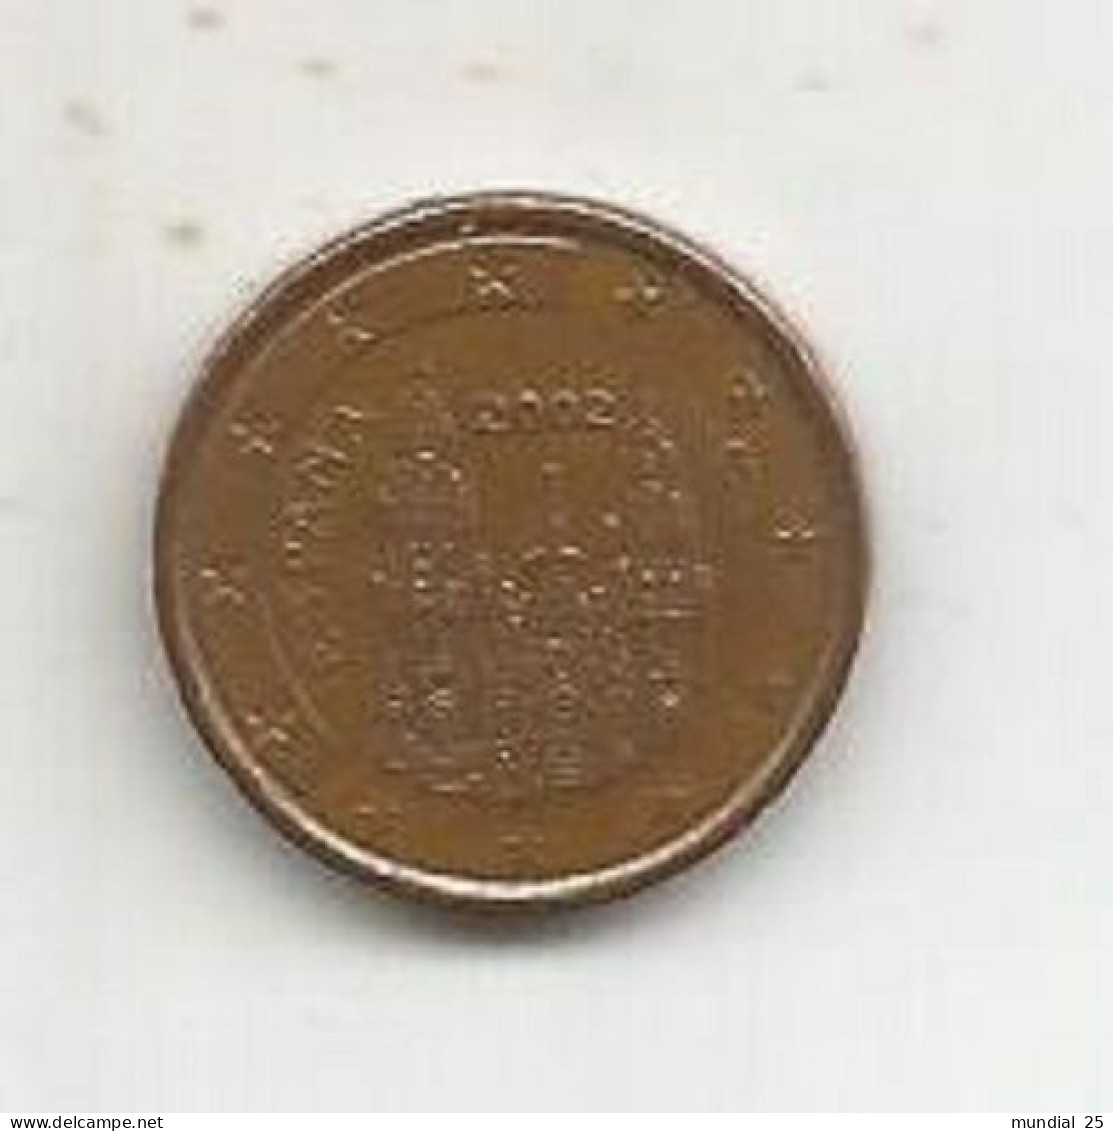 SPAIN 1 EURO CENT 2002 - España